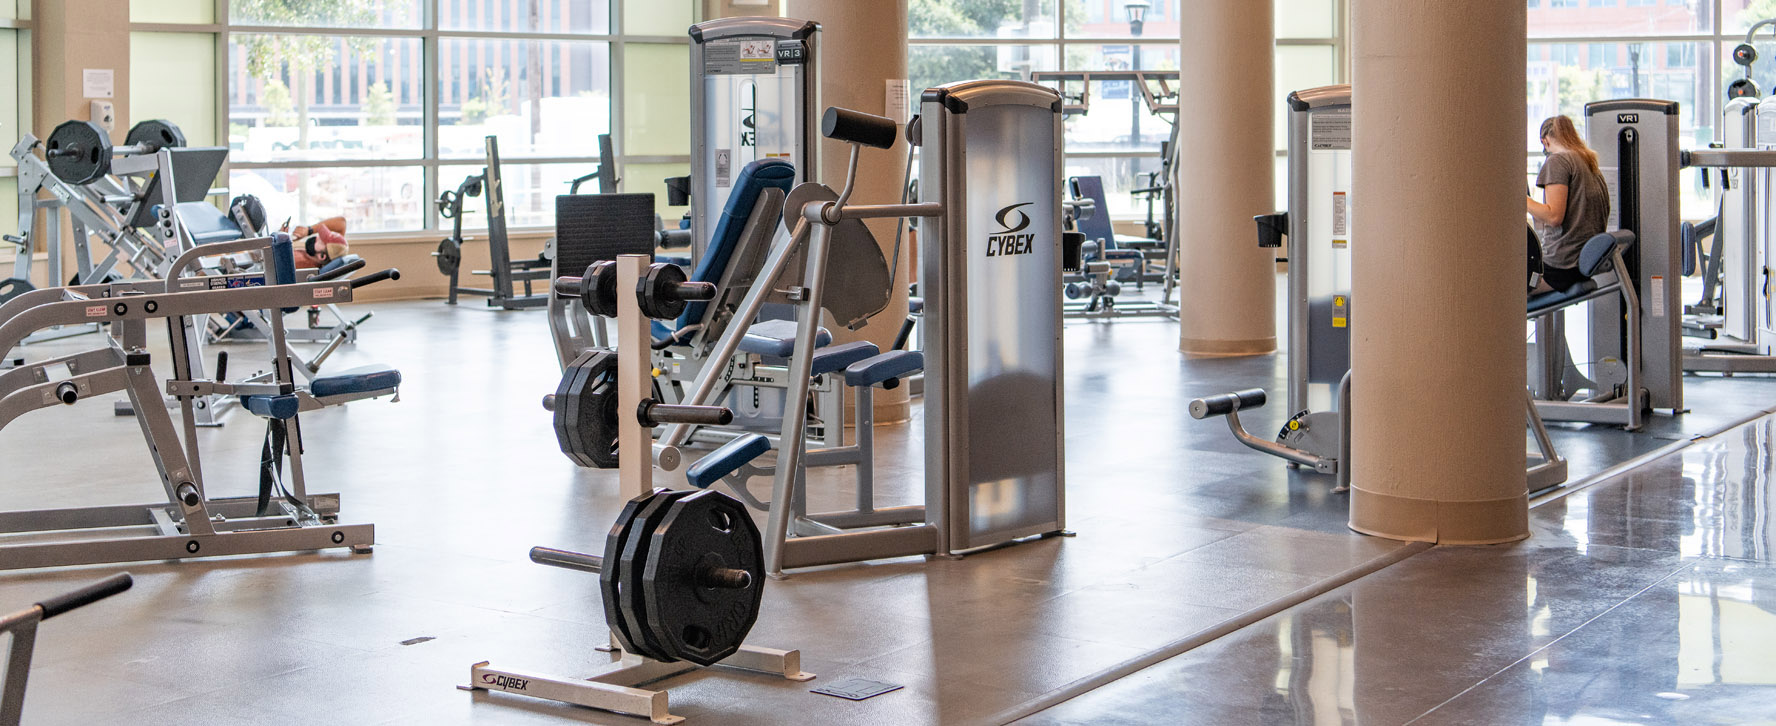 Augusta University Campus Recreation Center workout equipment